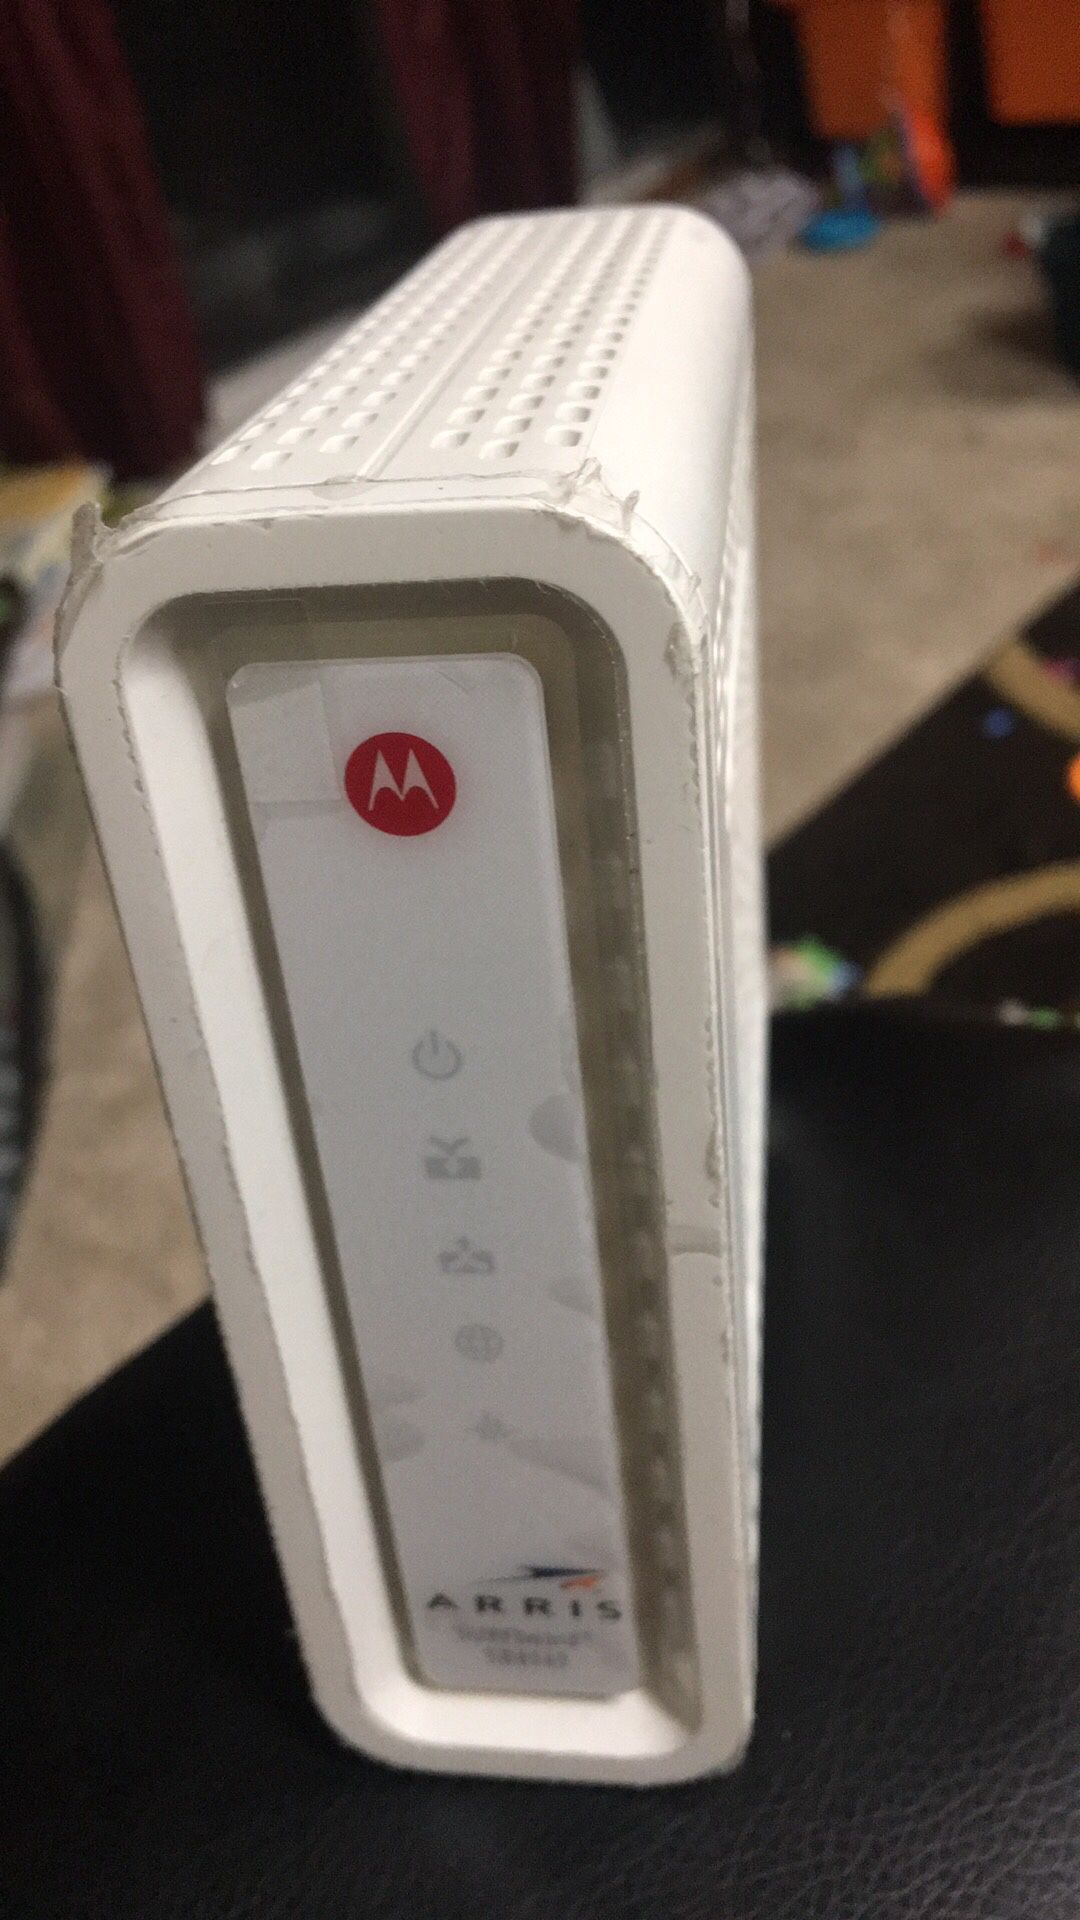 Motorola arris SURFboard sb6141 modem